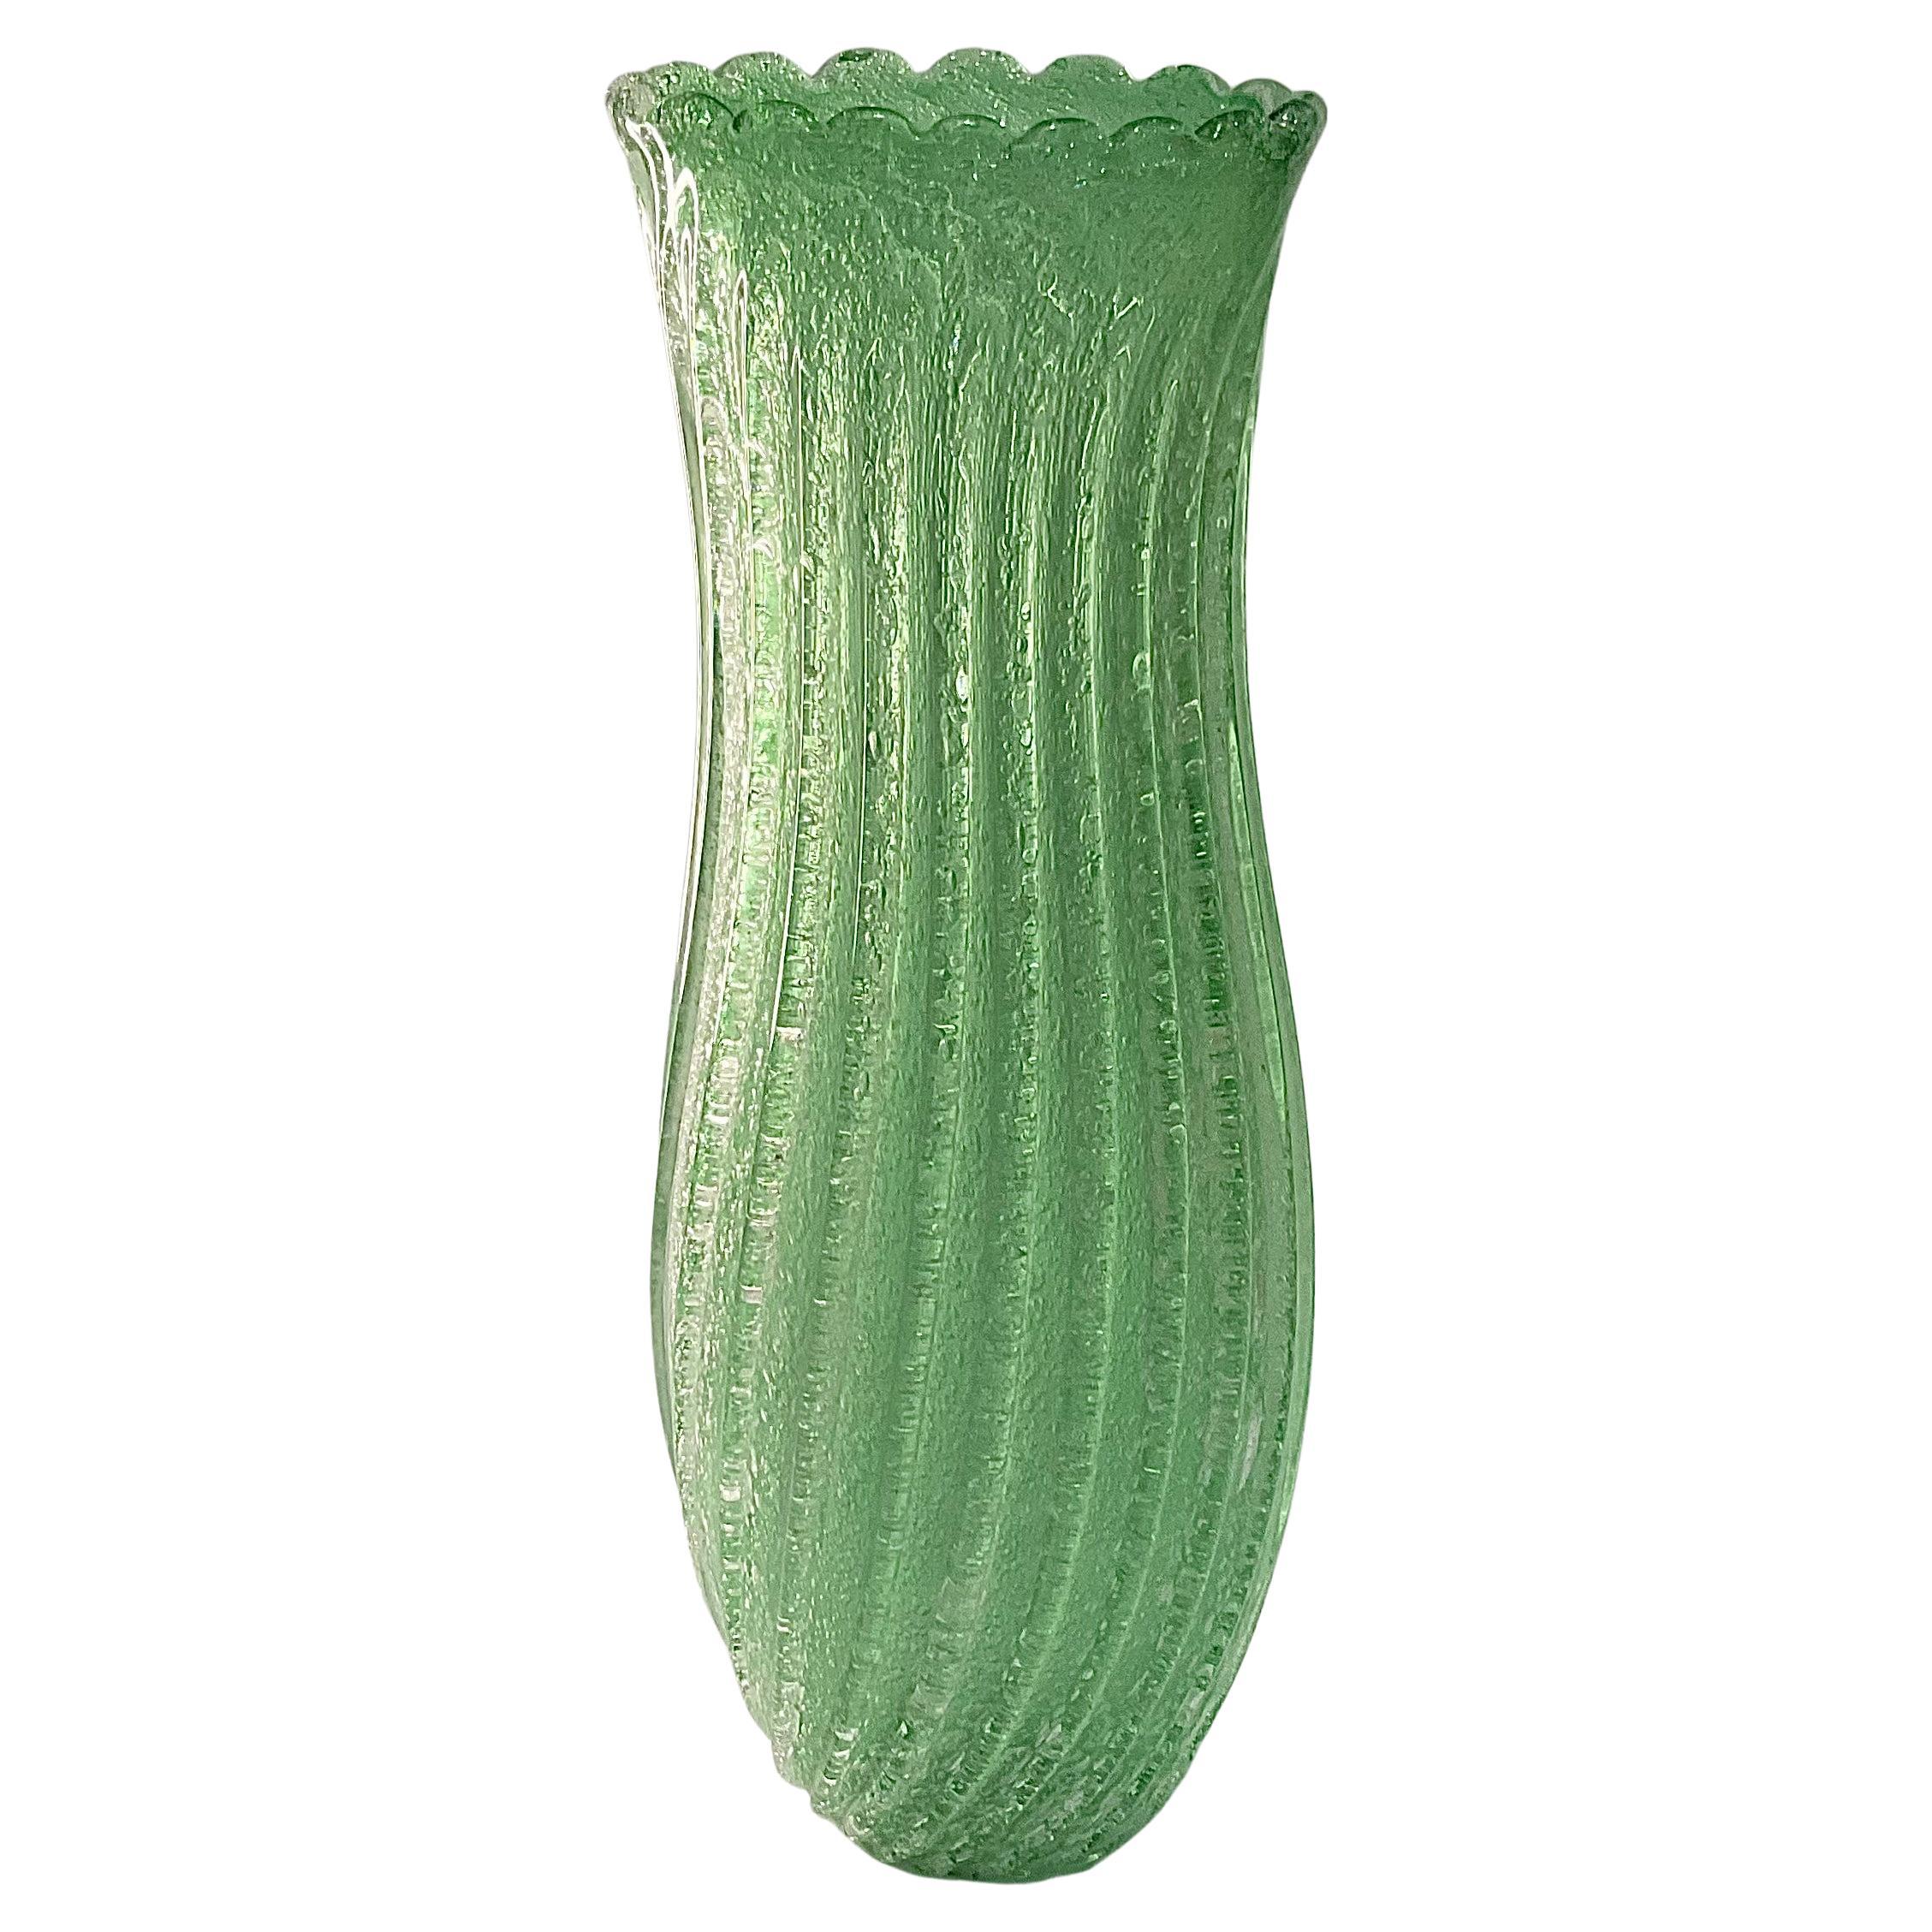 Grand vase en verre d'art de Murano en verre Pulegoso vert avec motif nervuré festonné en vente